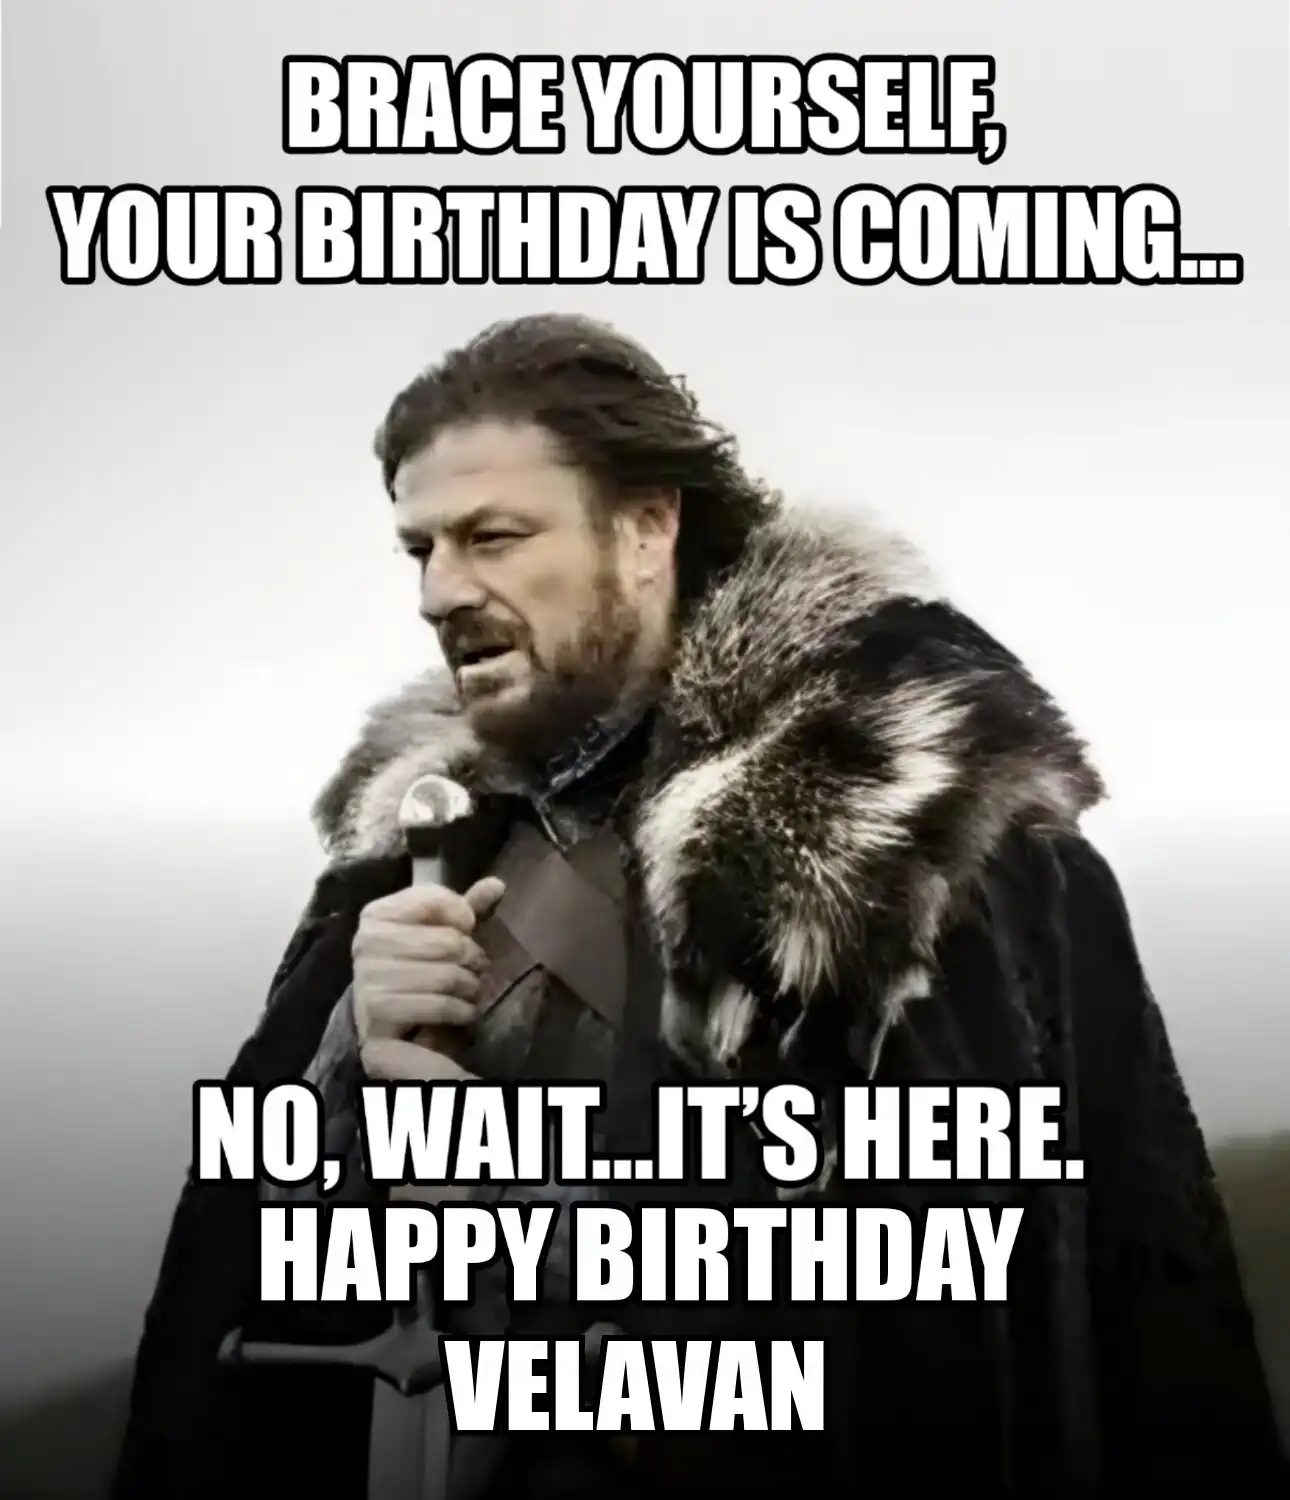 Happy Birthday Velavan Brace Yourself Your Birthday Is Coming Meme